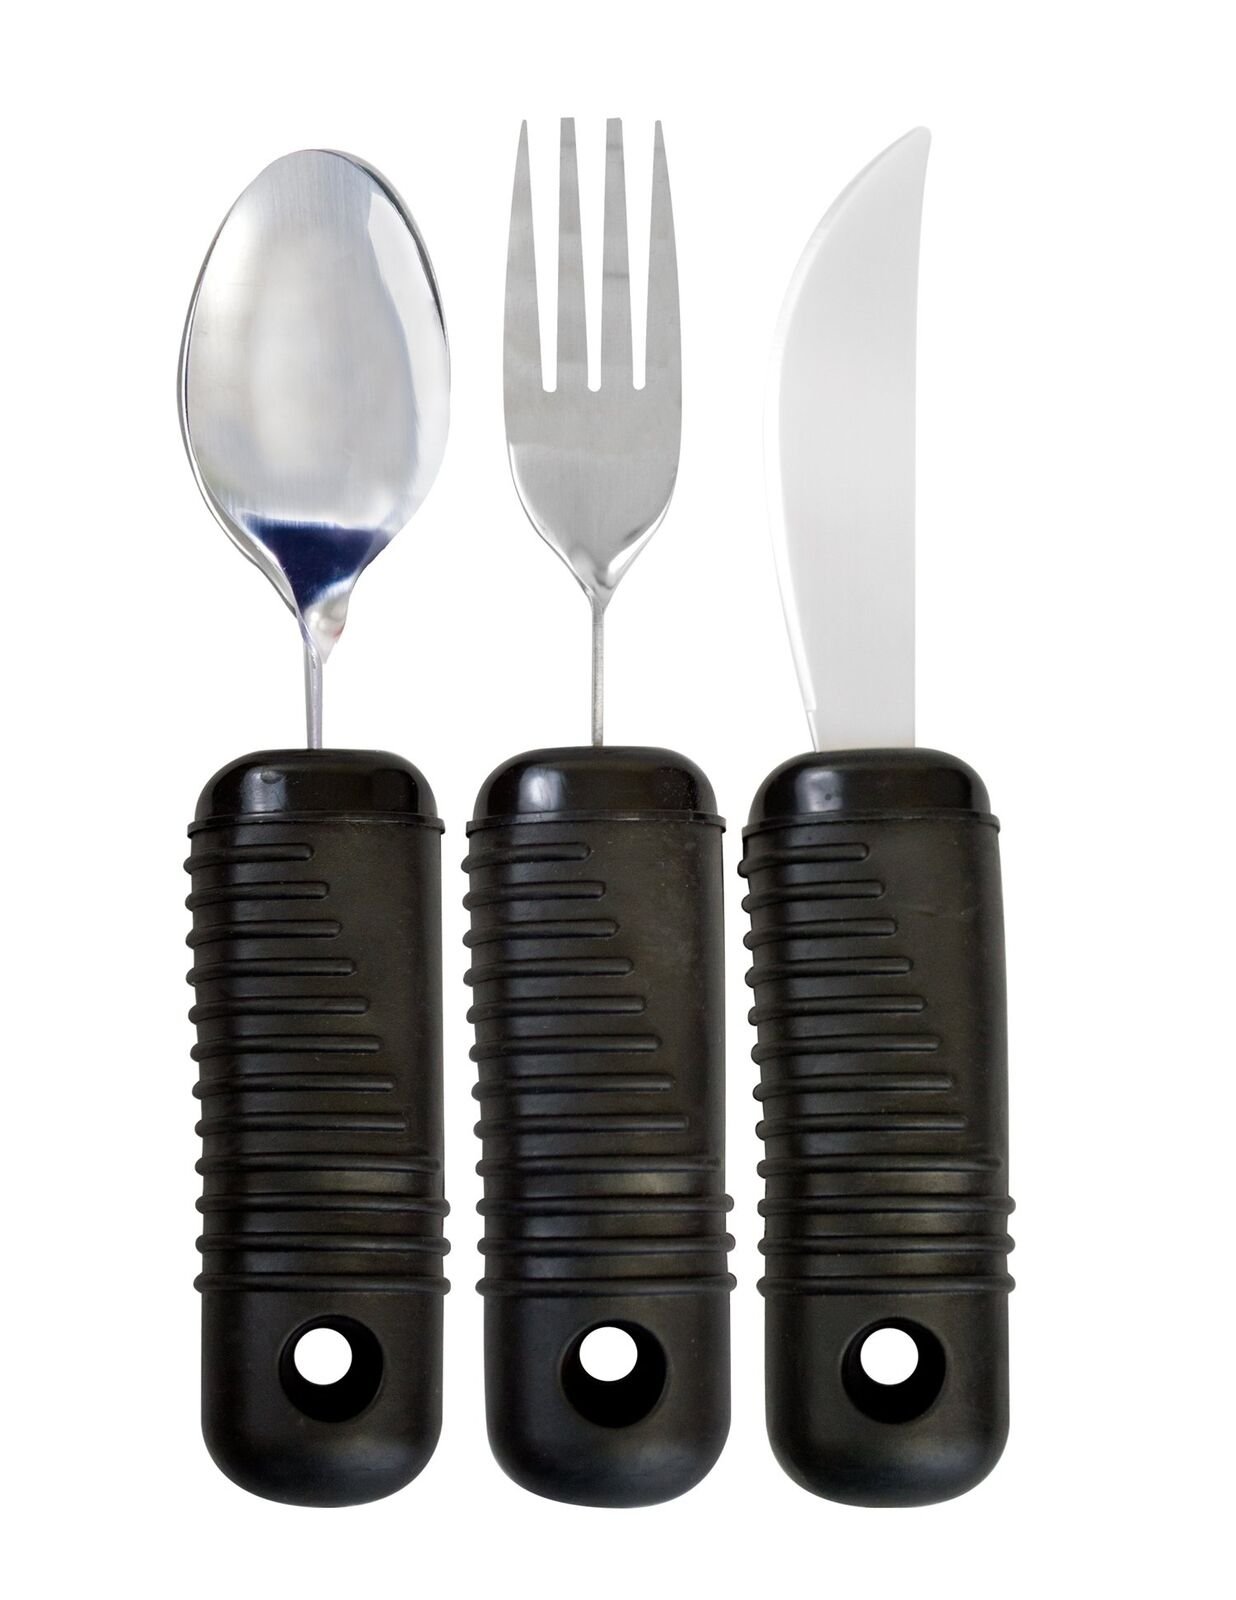 Set of 5 Colored Adaptive Utensils - Stainless Steel Knife, Rocker Knife,  Fork, Soup Spoon, Dinner Spoon